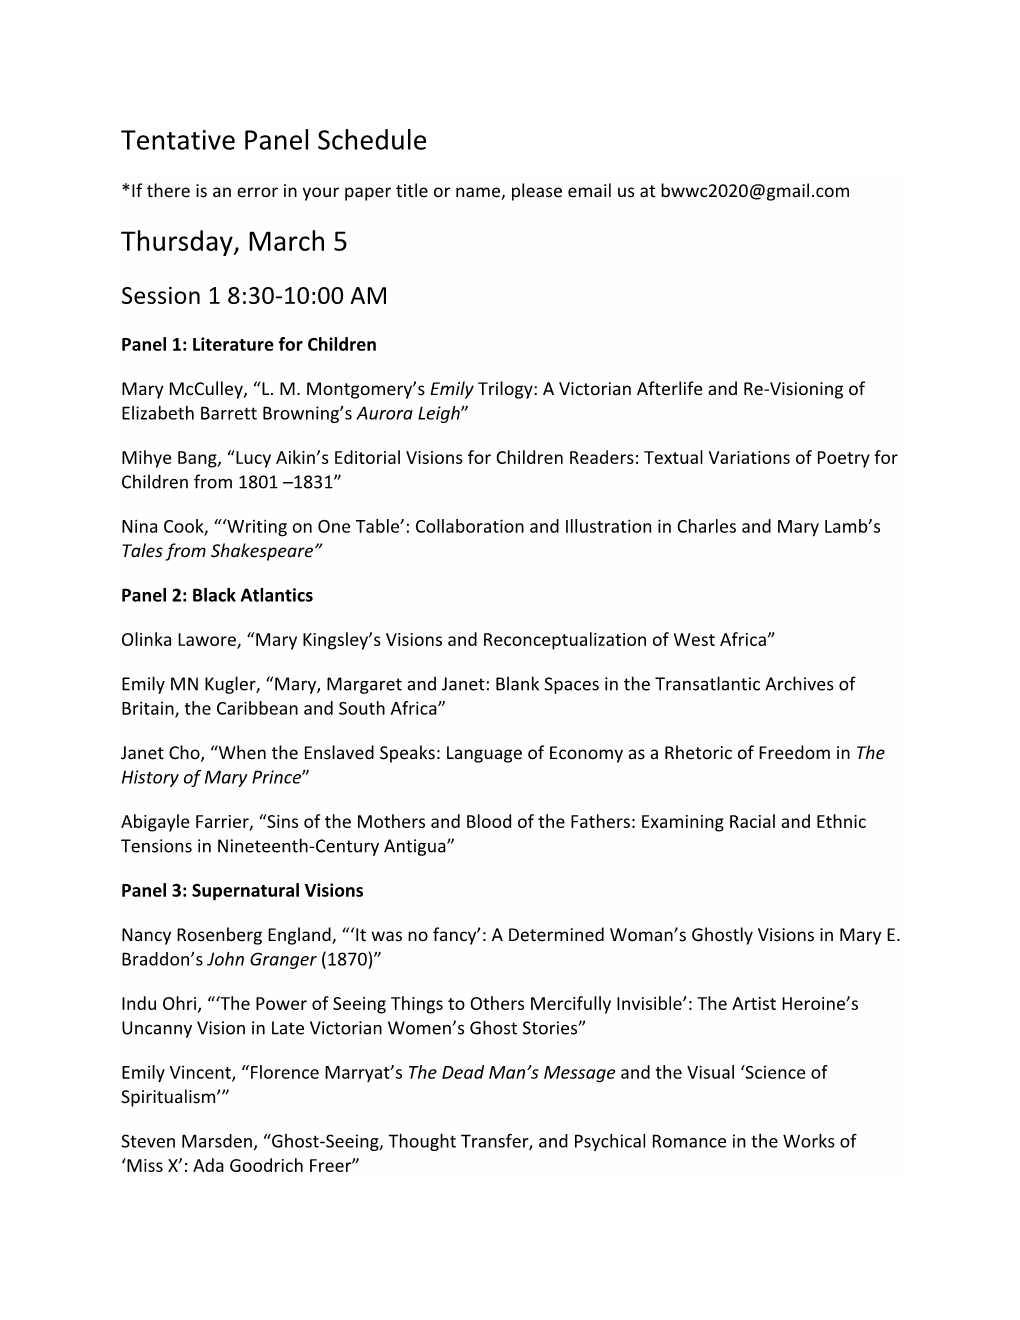 Tentative Panel Schedule Thursday, March 5